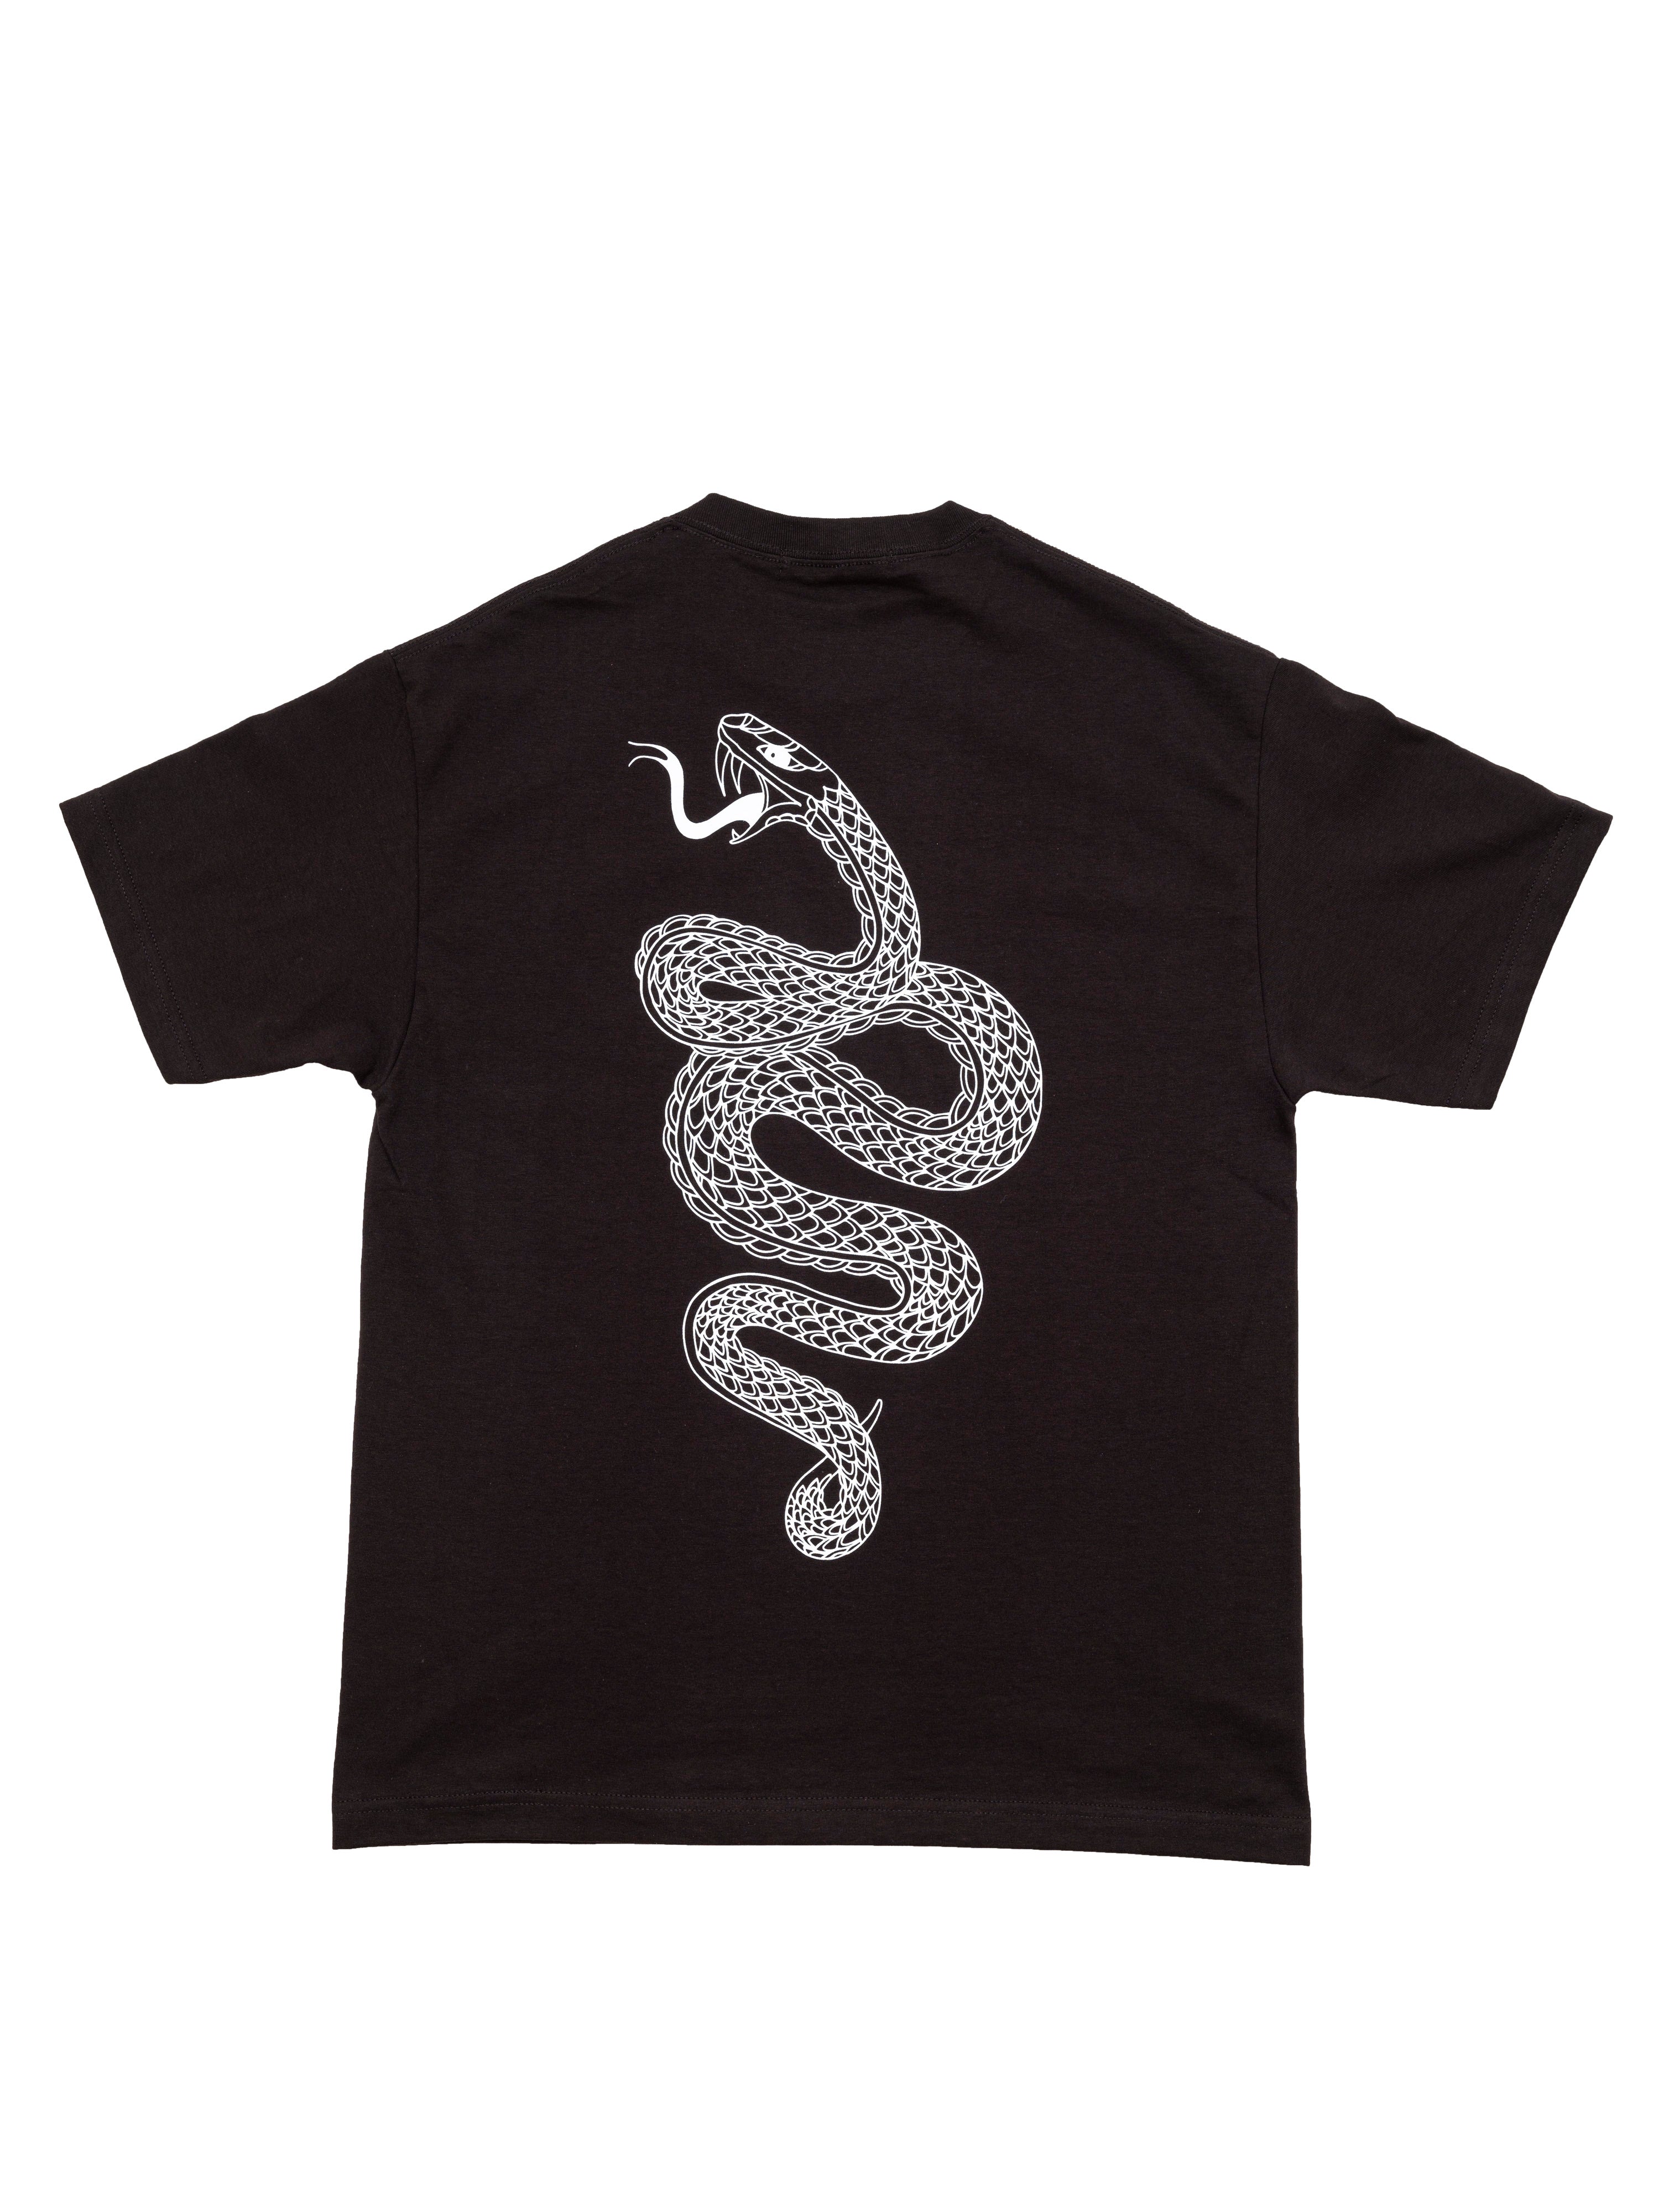 DURRANT "Brown Snake" T-shirt BLACK